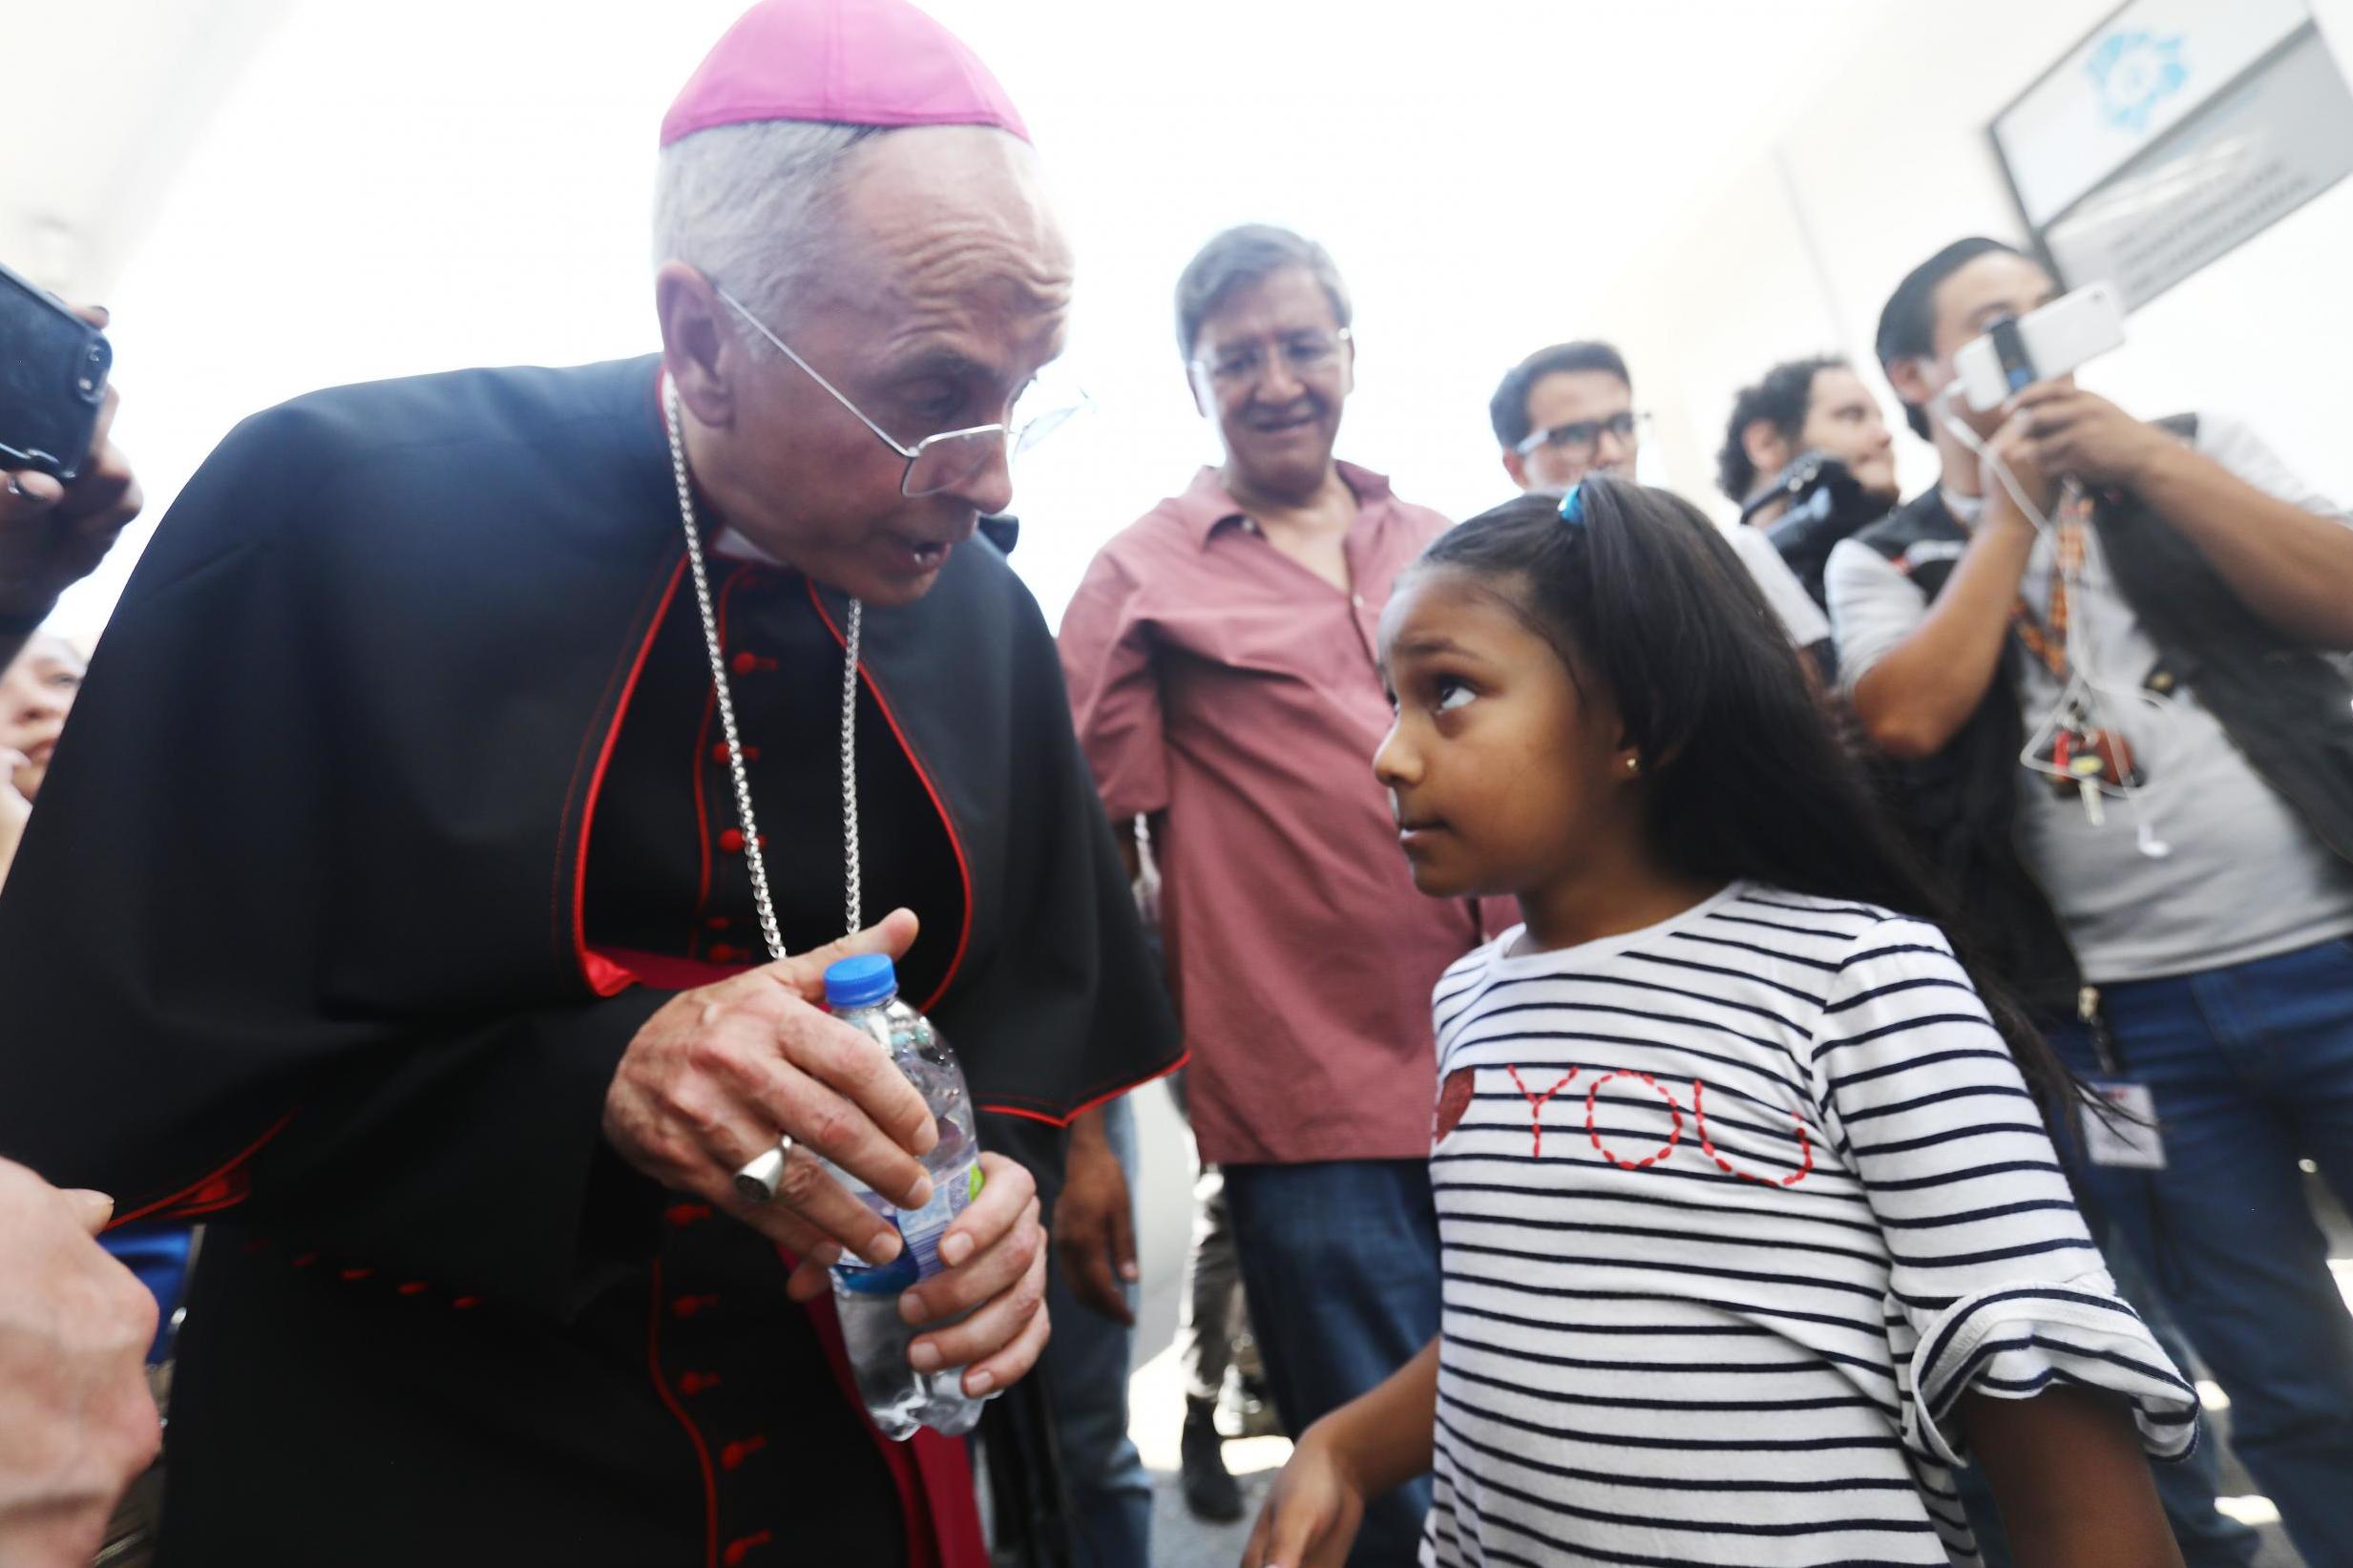 El Paso Bishop Mark Seitz prepares to escort a 9-year-old Honduran girl before they cross a border entry bridge into the US.